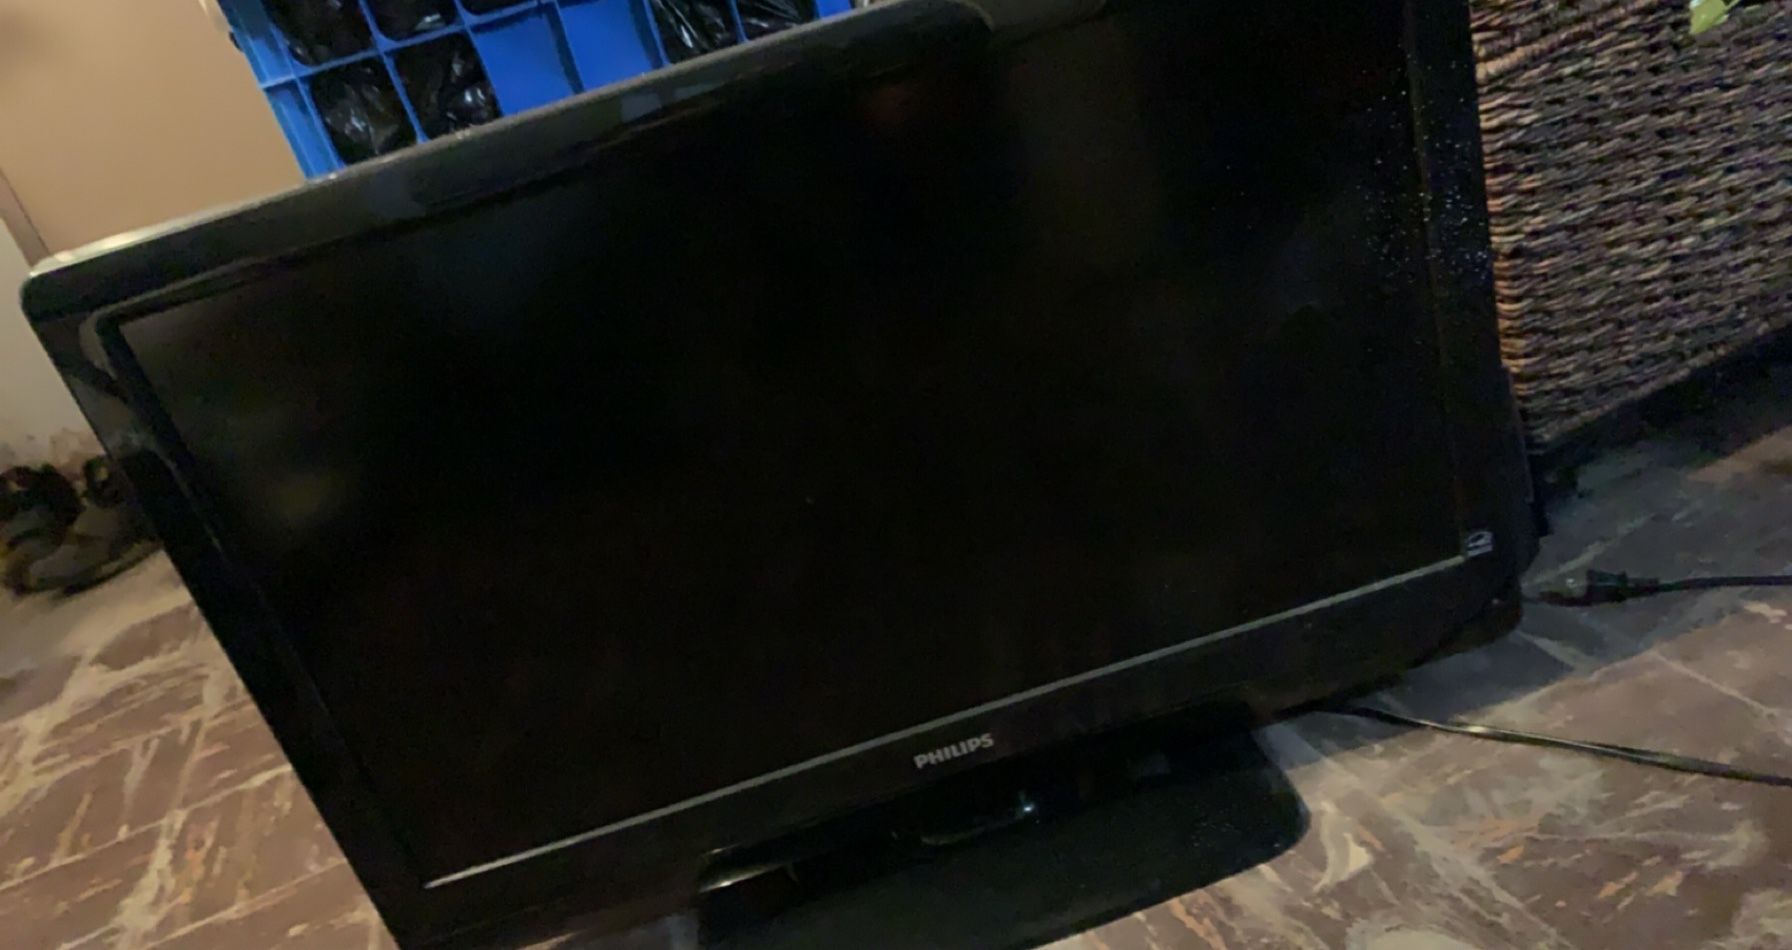 32 inch Philips TV